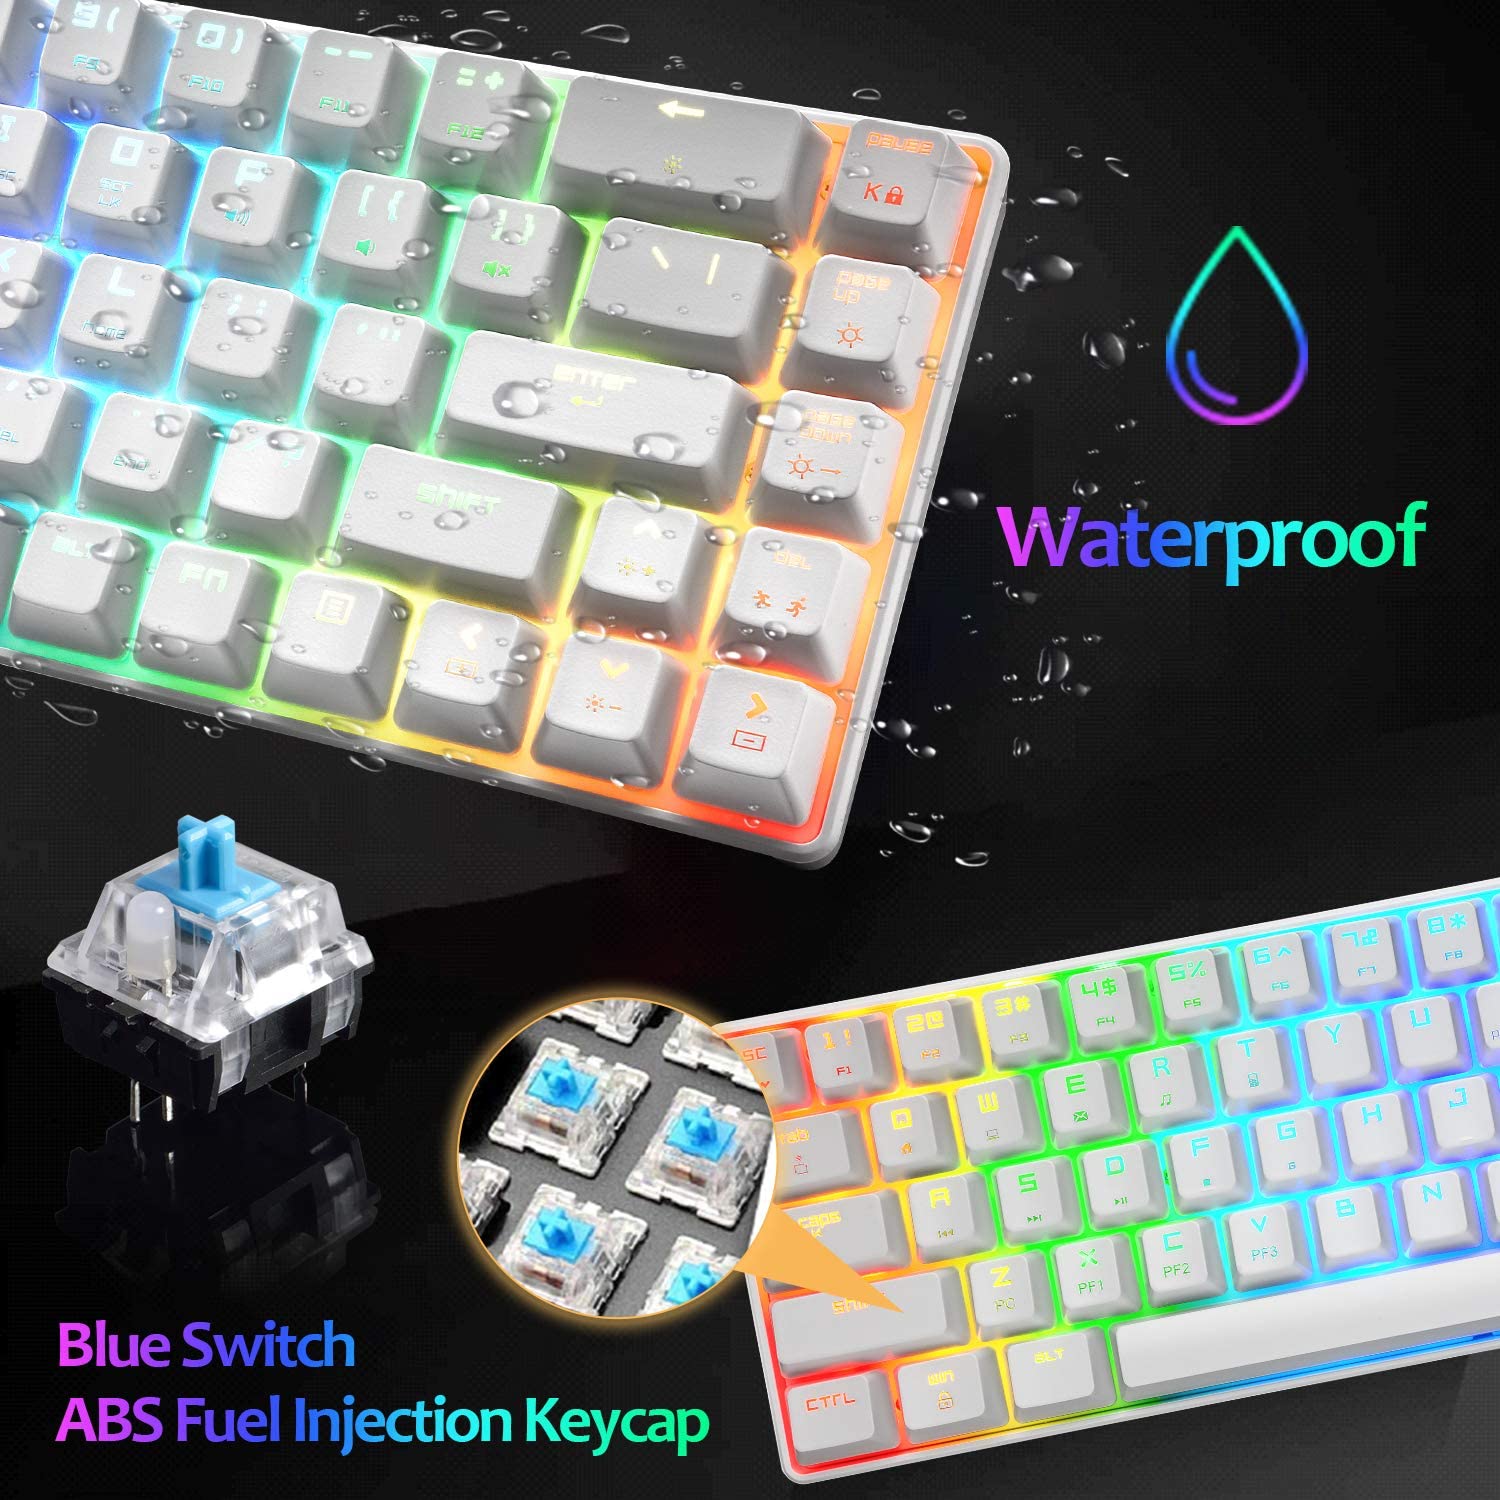 MAGIC-REFINER MK14 60% Mechanical Gaming Keyboard Type C Wired 68 Keys LED illuminated 18 Chroma RGB Lighting Clicky Switches Anti-ghosting